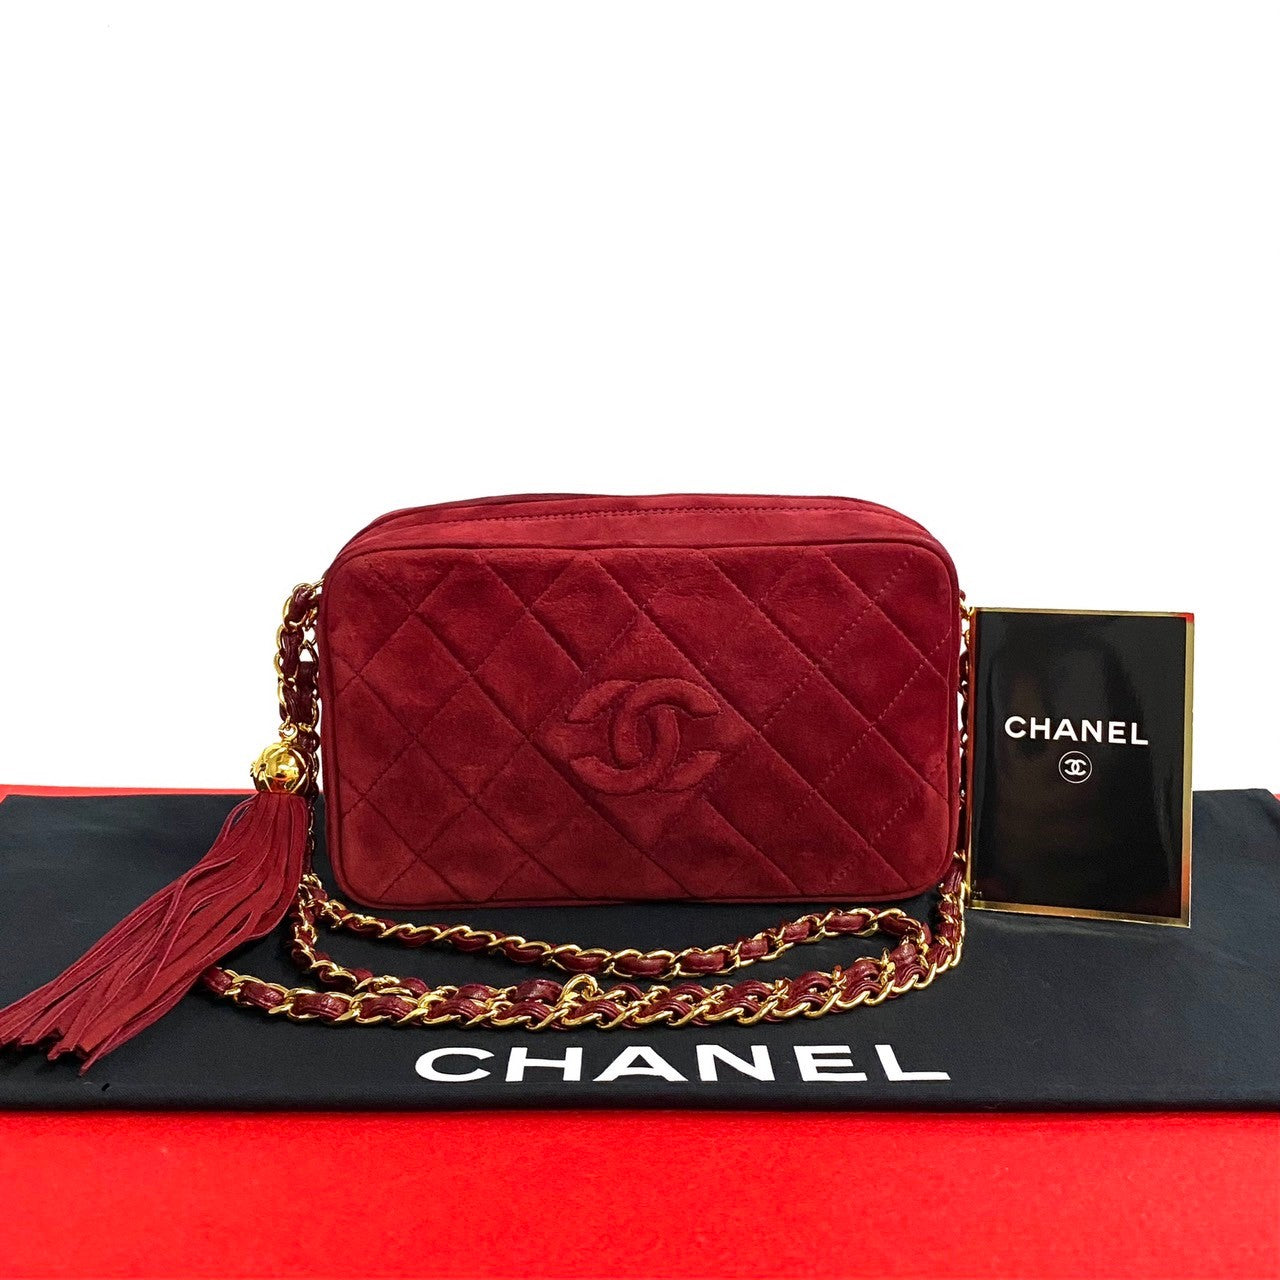 Chanel Matelasse Coco Suede Leather Tassel Chain Shoulder Bag Suede Shoulder Bag 51713 in Excellent condition